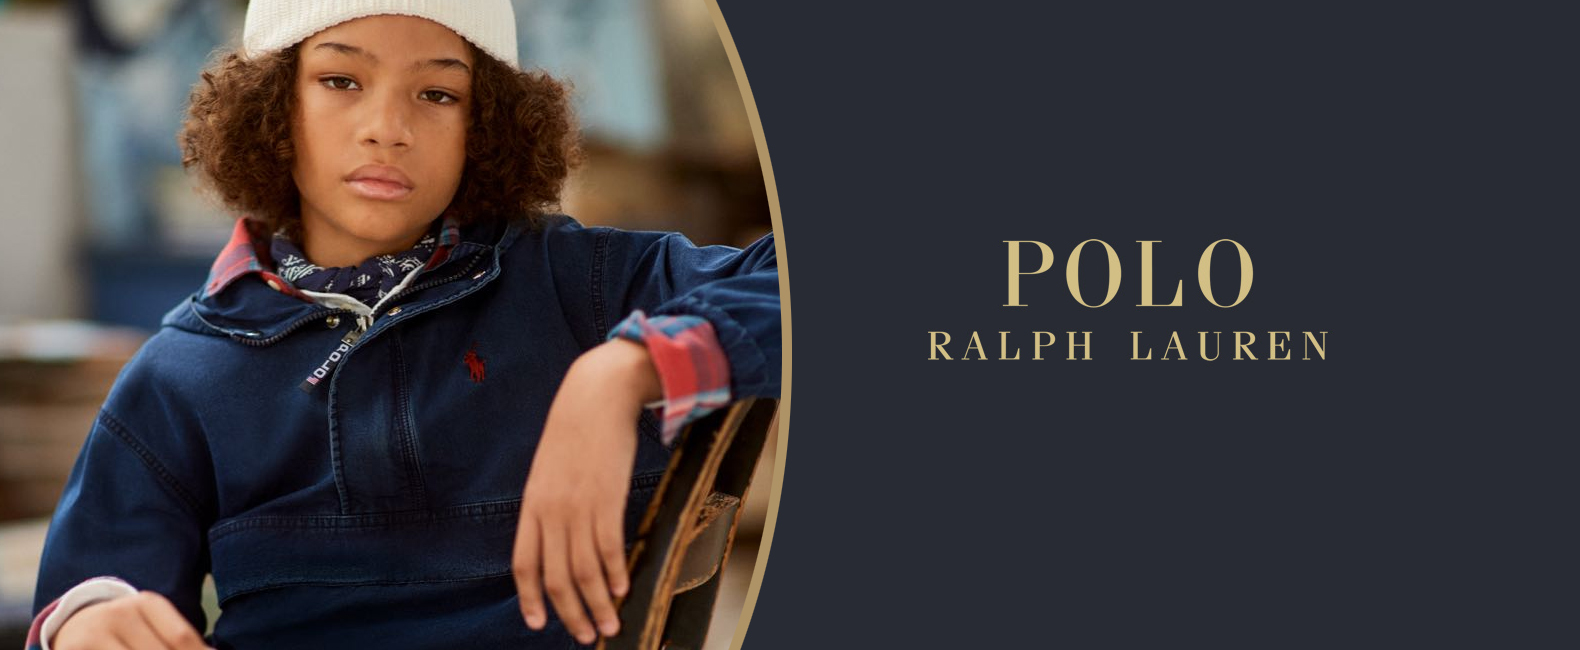 Polo Ralph Lauren Teens